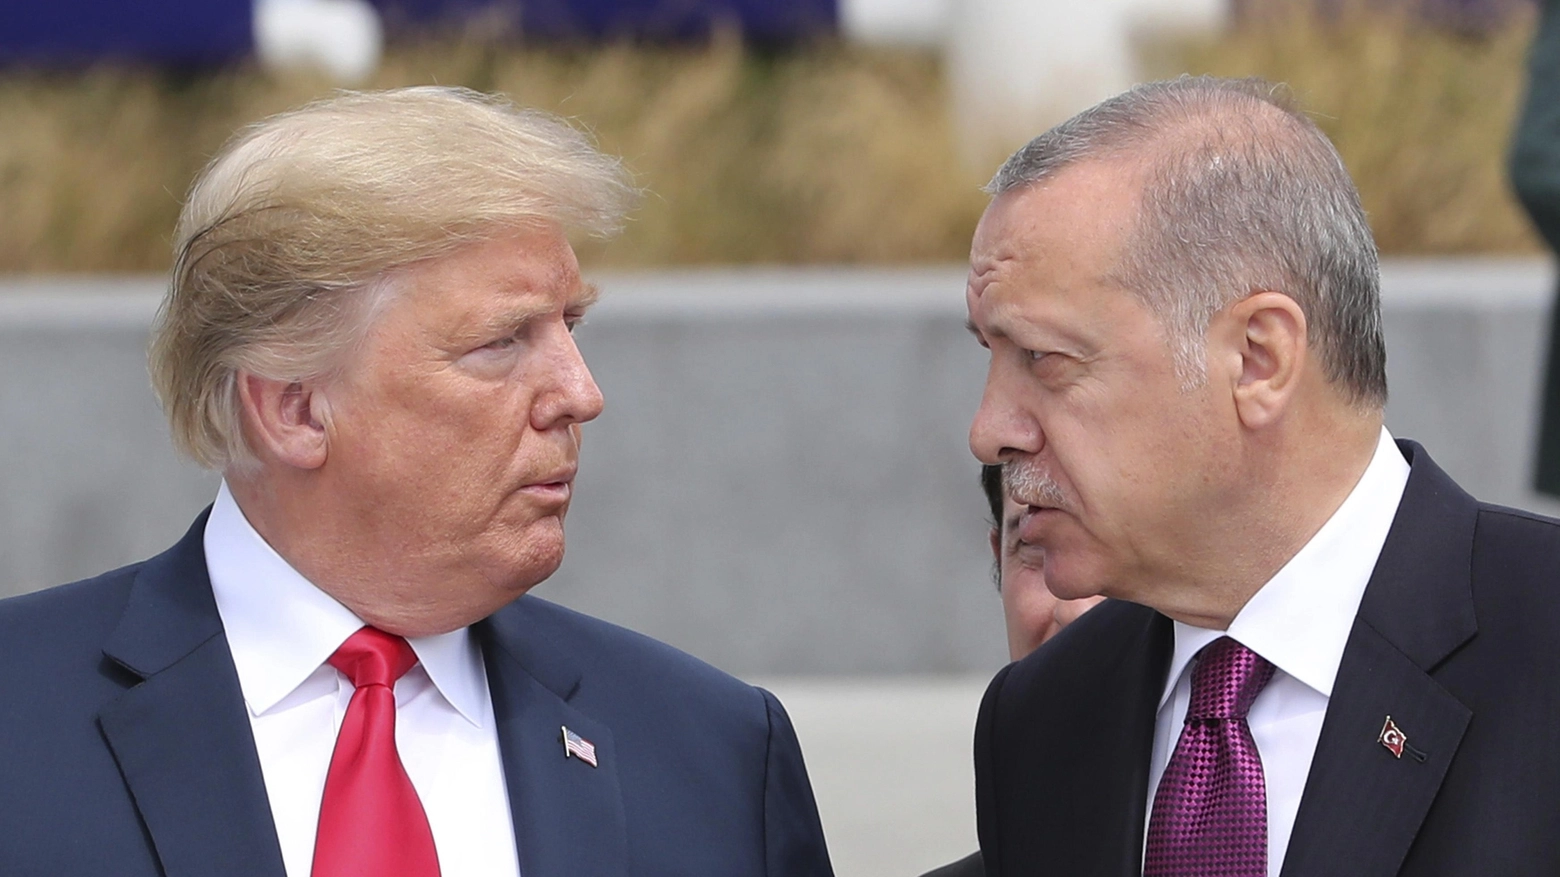 Donald Trump e Recep Tayyip Erdoğan (Ansa)